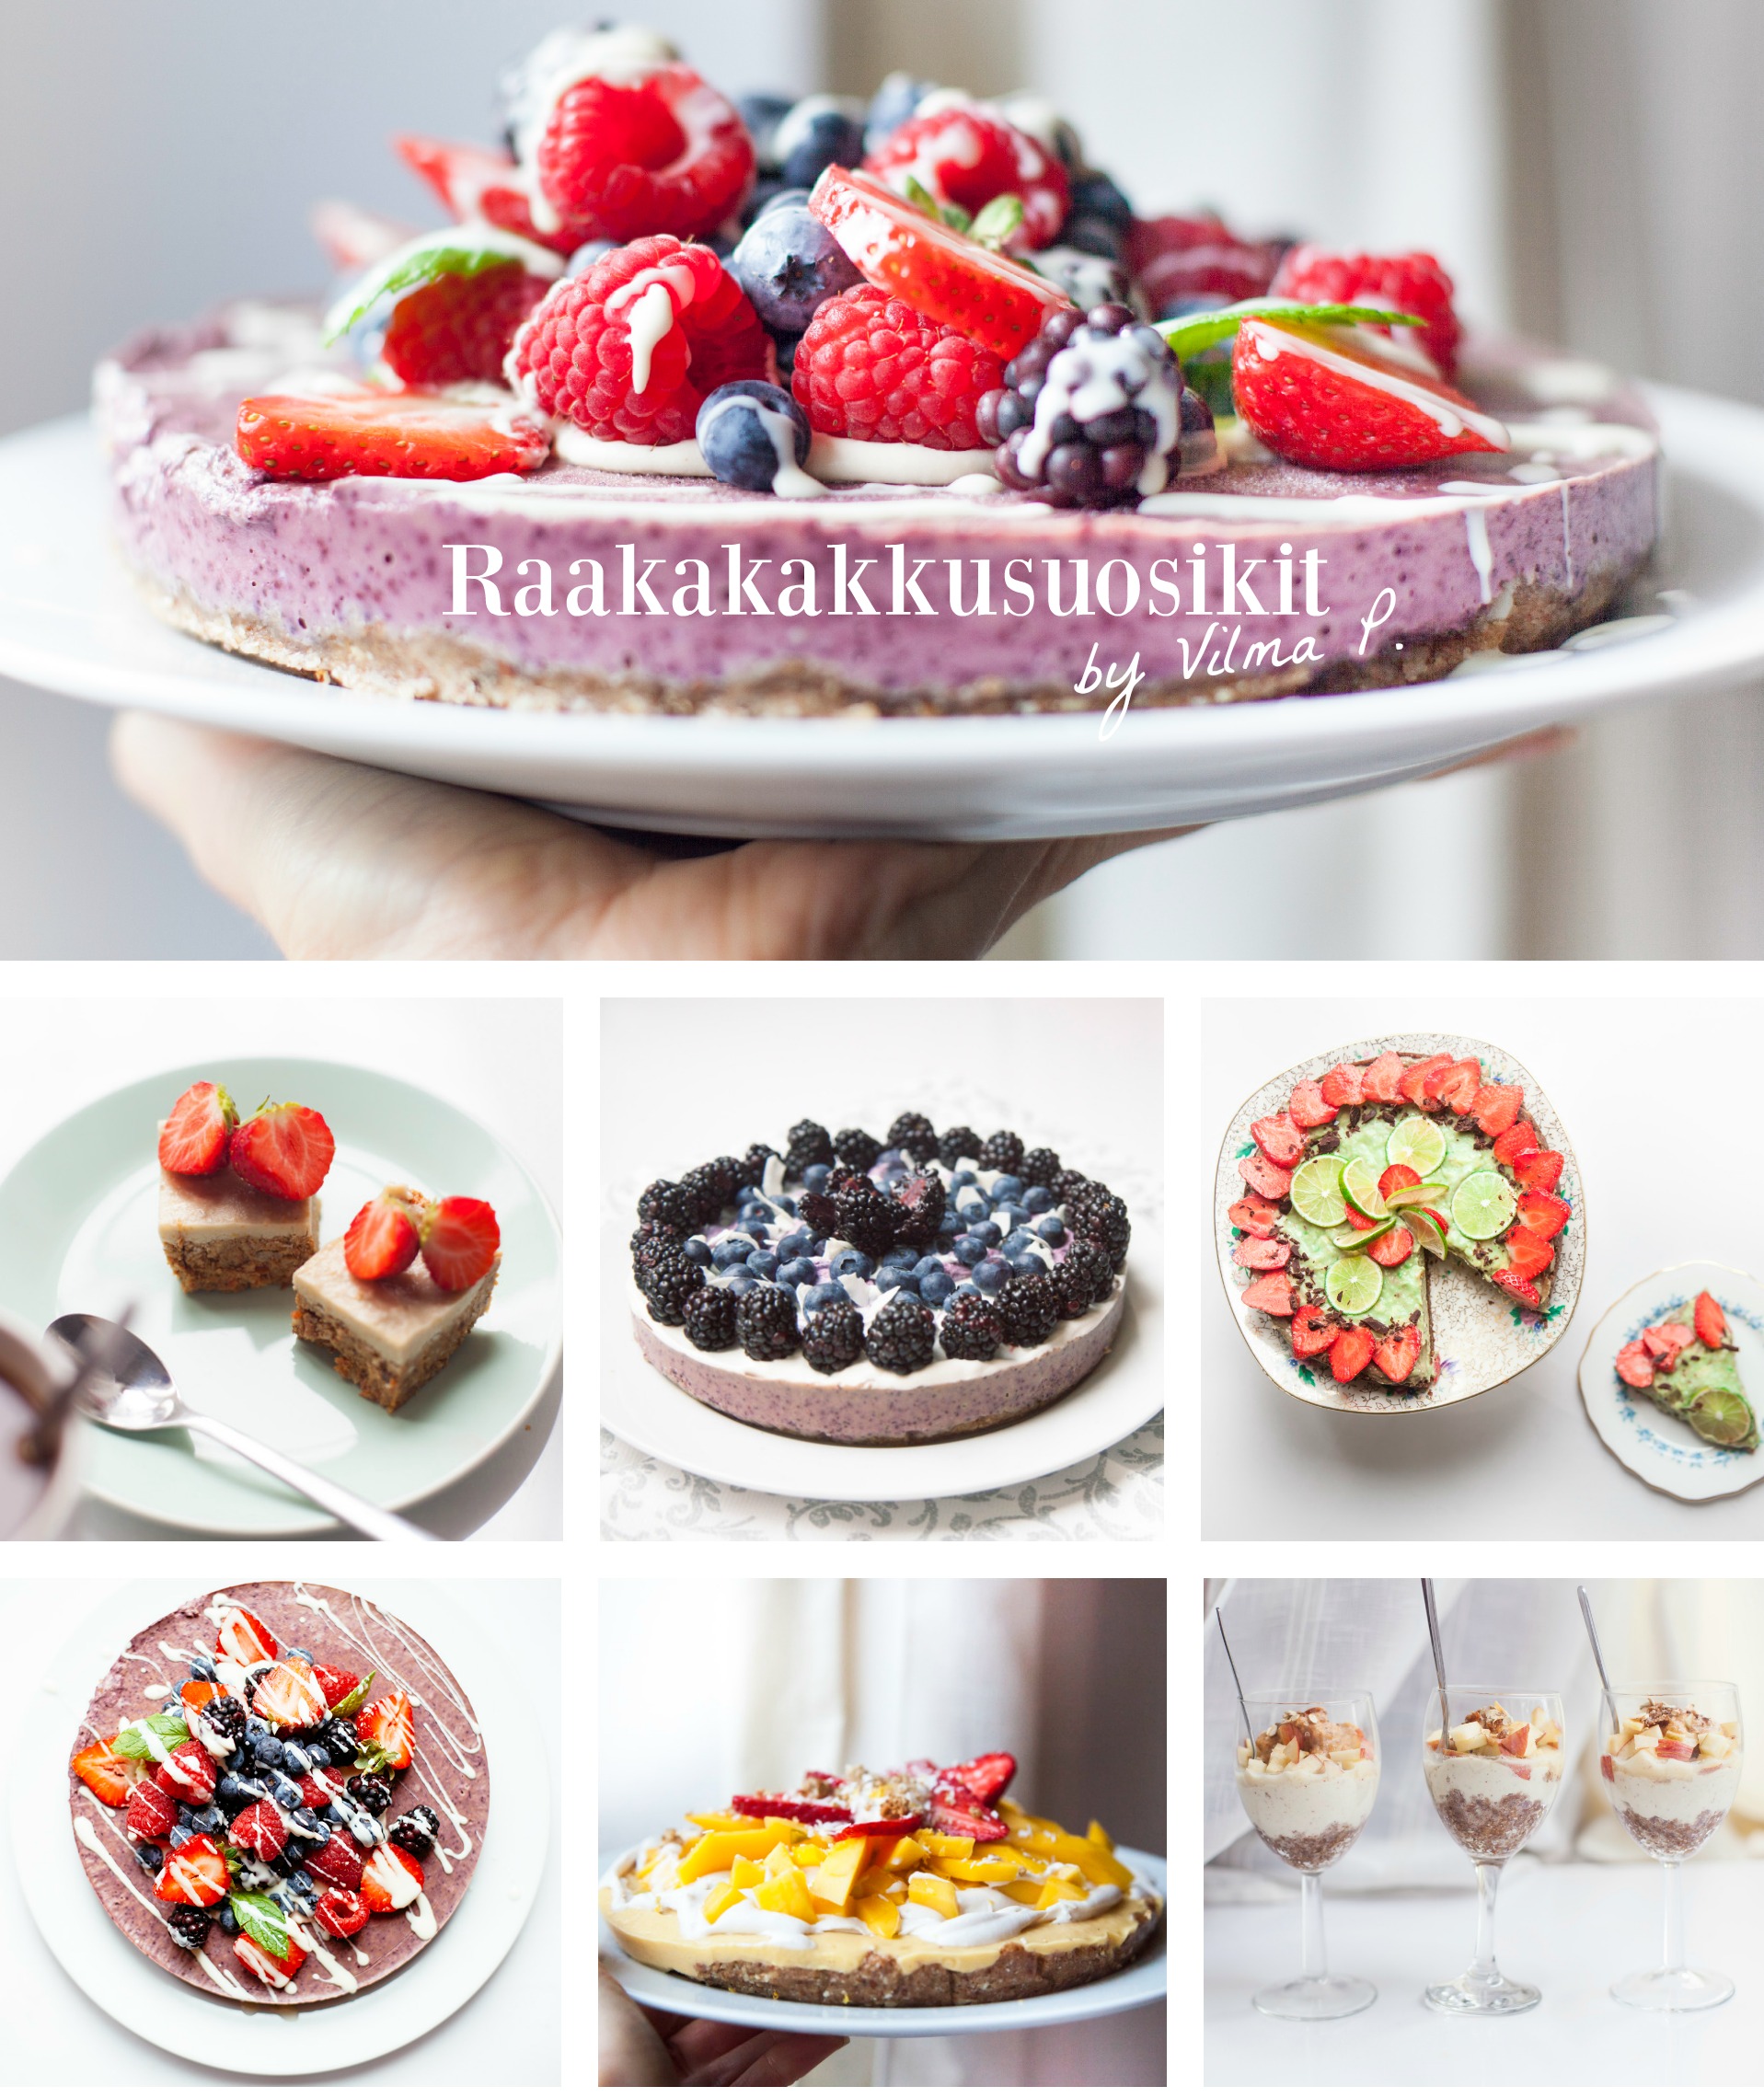 Raw Cake Recipes by Vilma P.